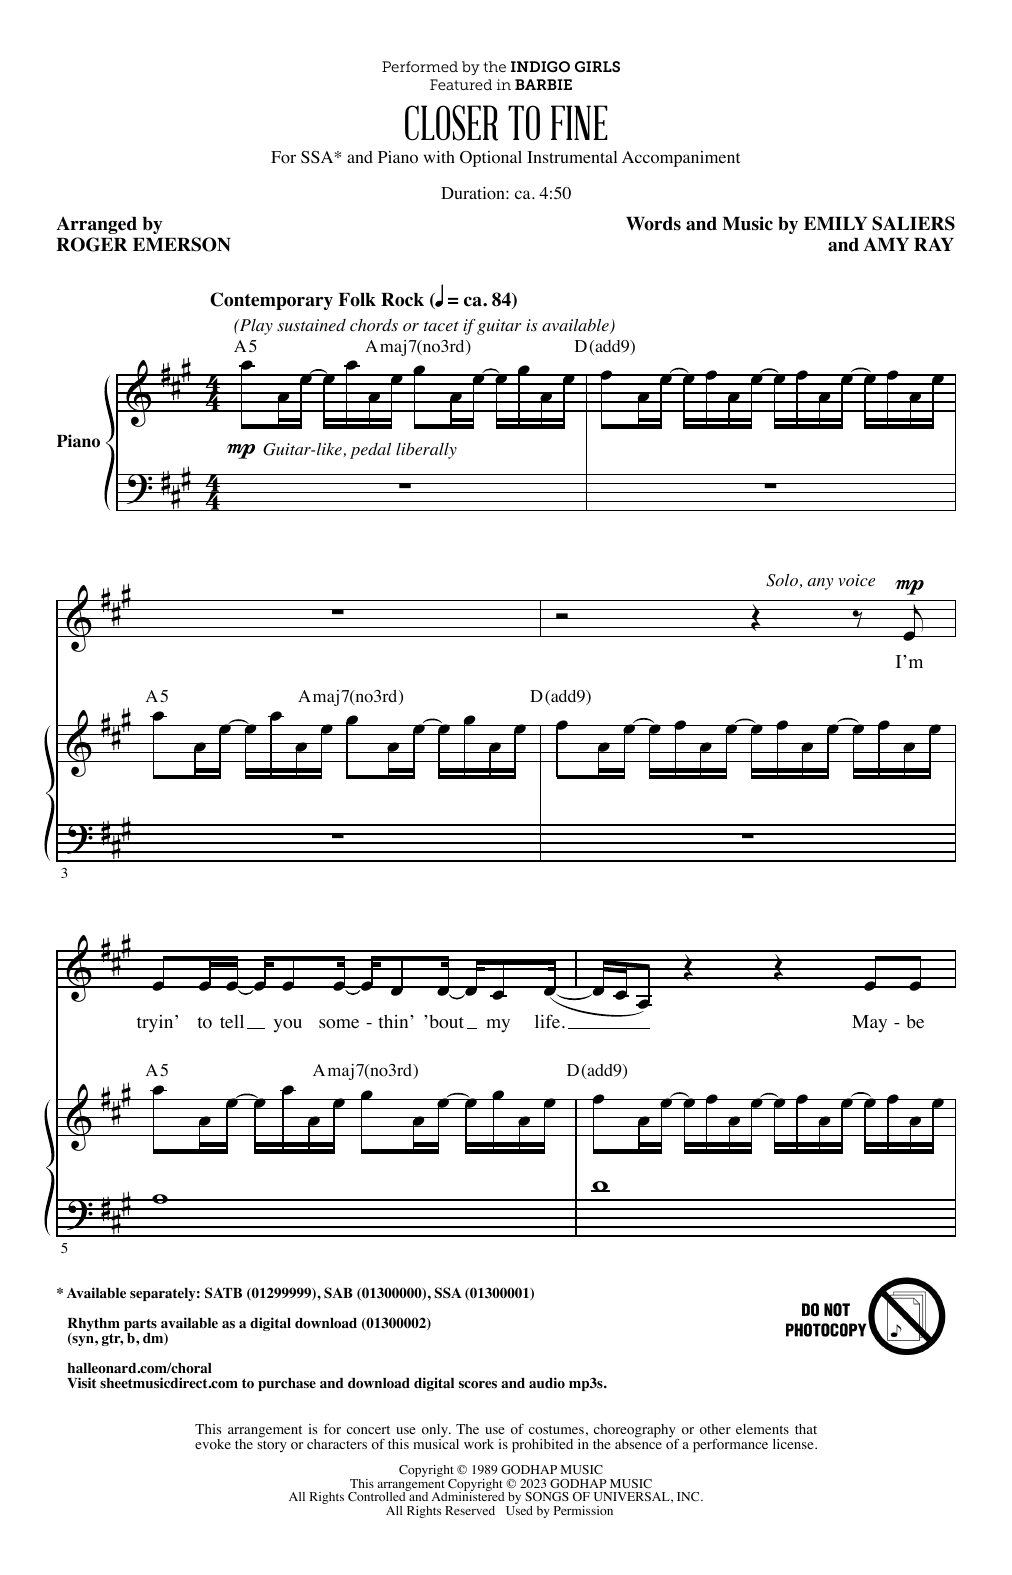 Indigo Girls Closer To Fine (arr. Roger Emerson) Sheet Music Notes & Chords for SATB Choir - Download or Print PDF